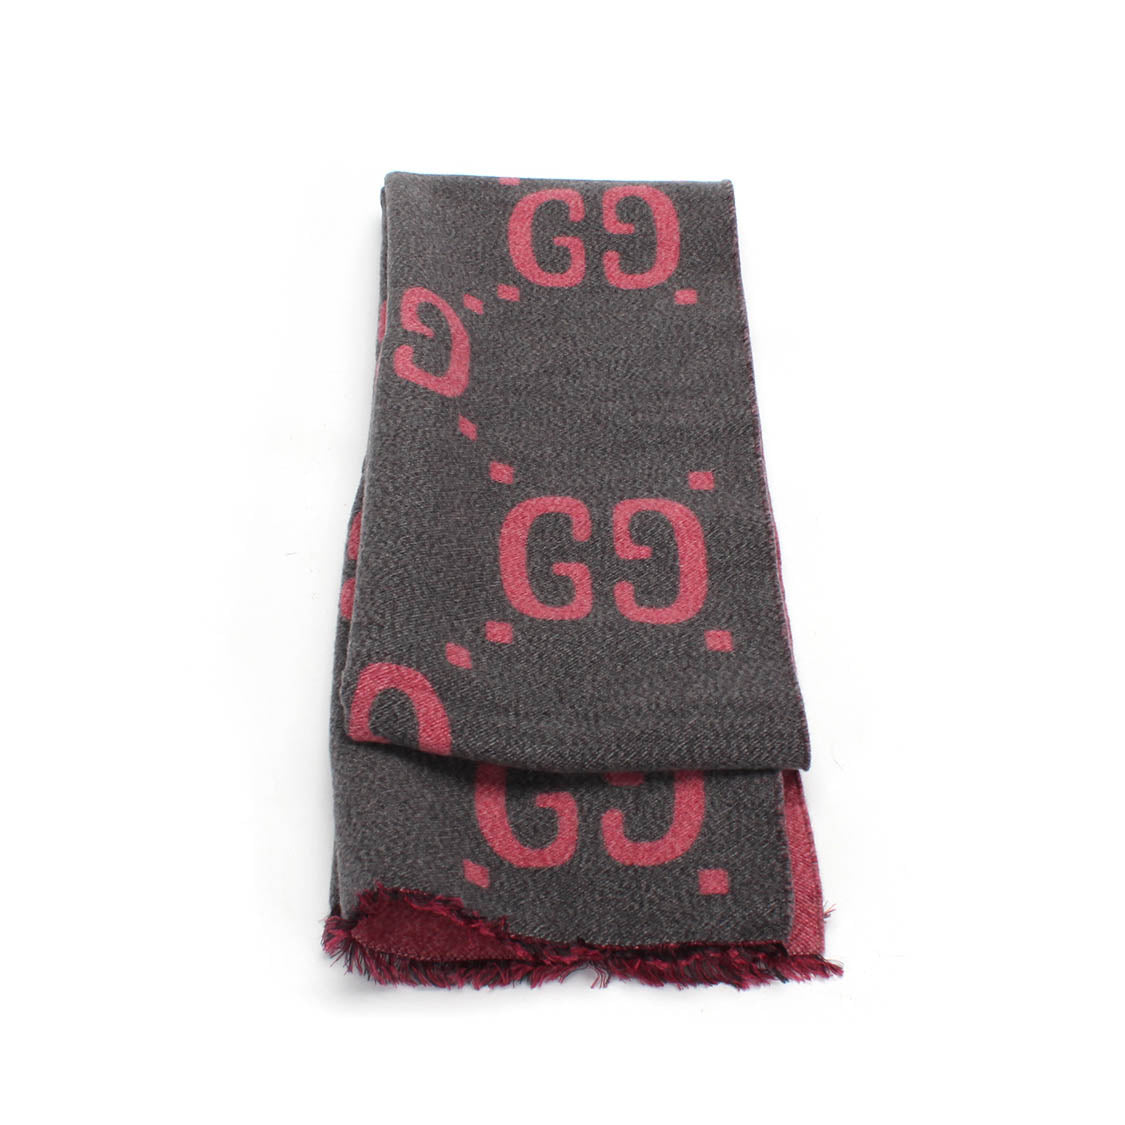 GG羊毛围巾